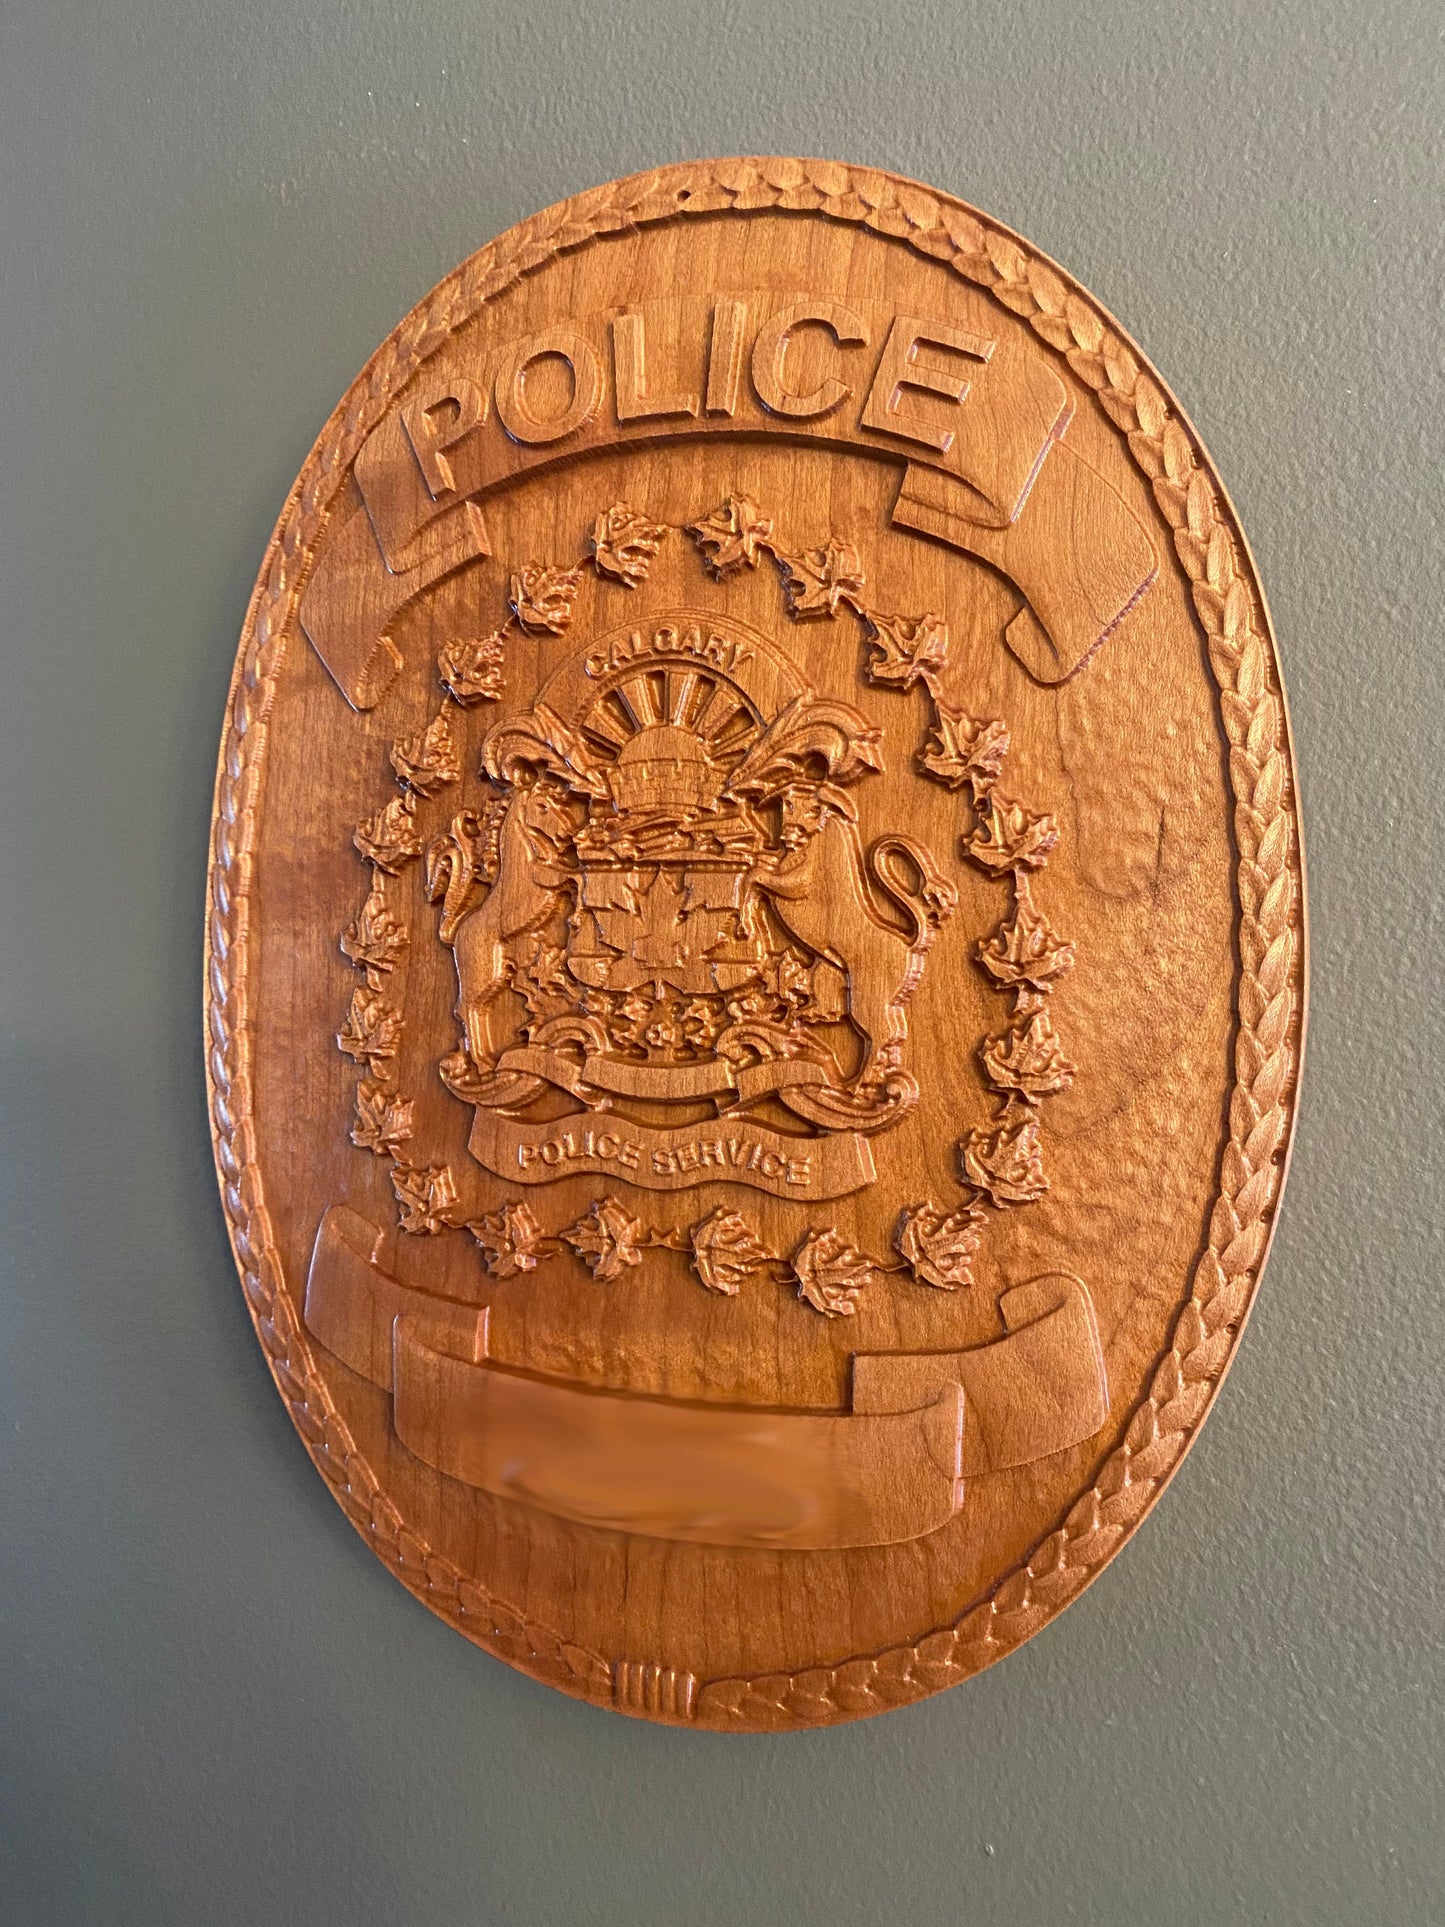 Calgary Police Wooden Badge